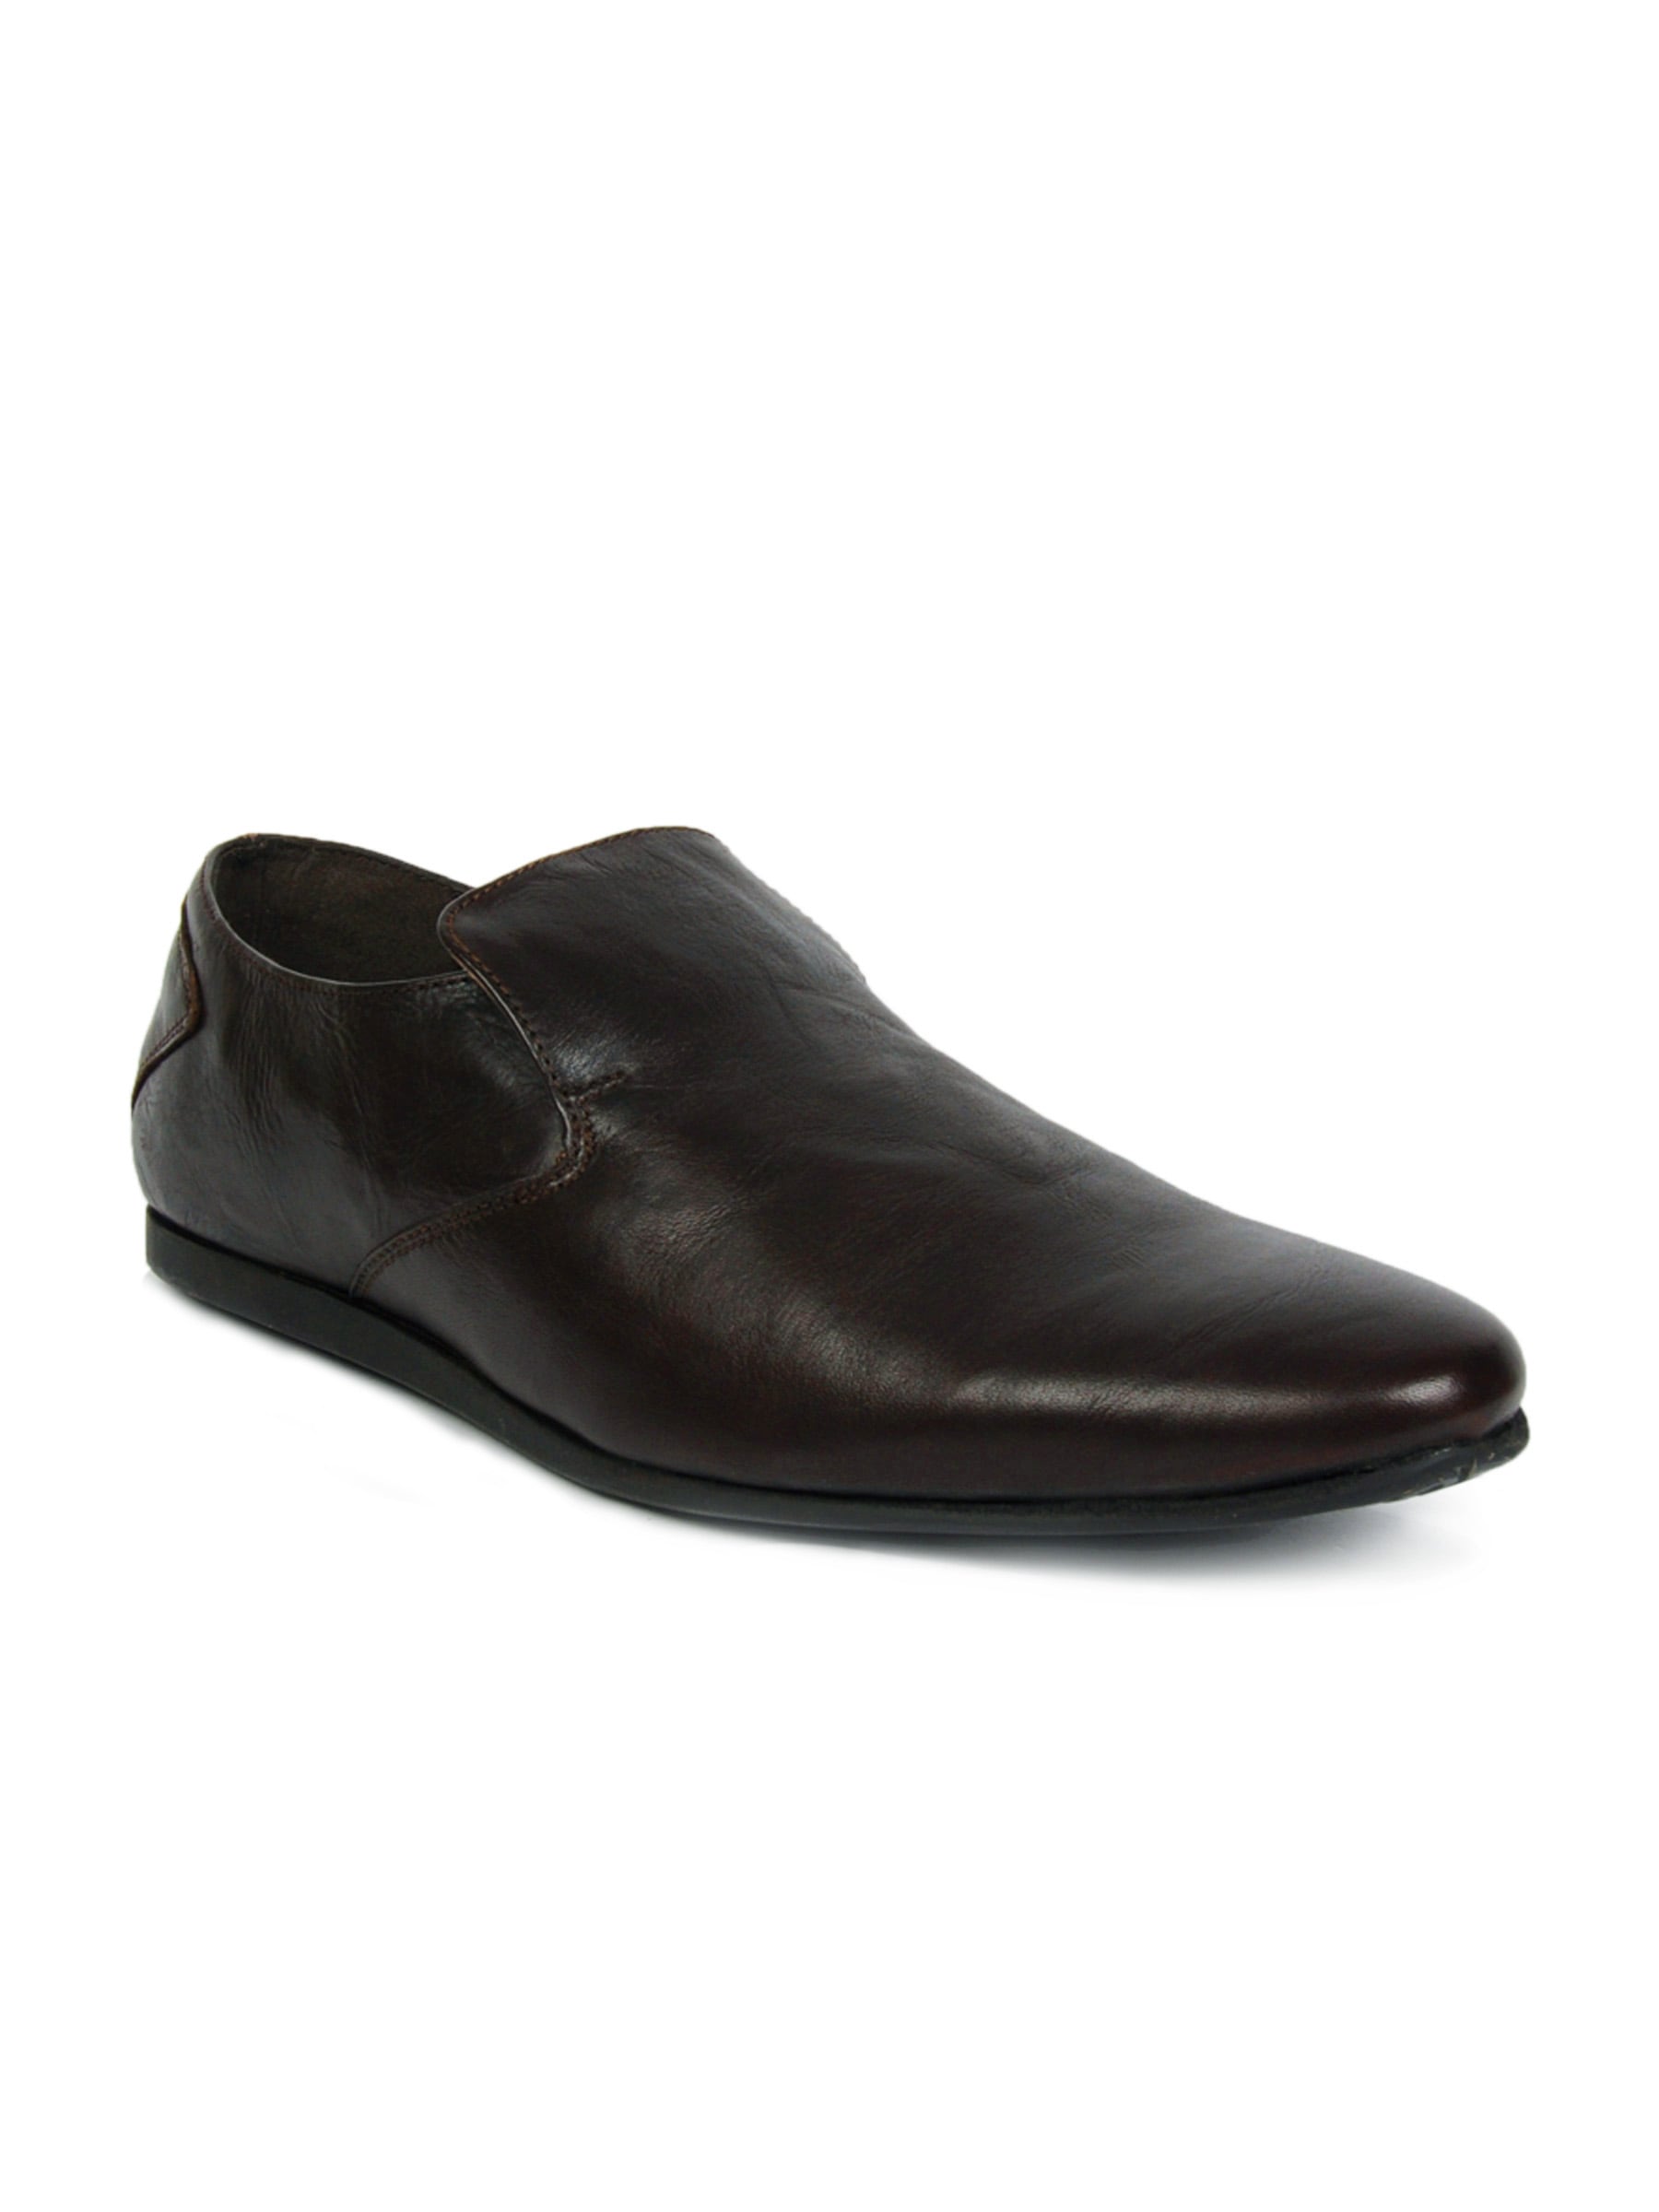 Carlton London Men Formal Brown Formal Shoes